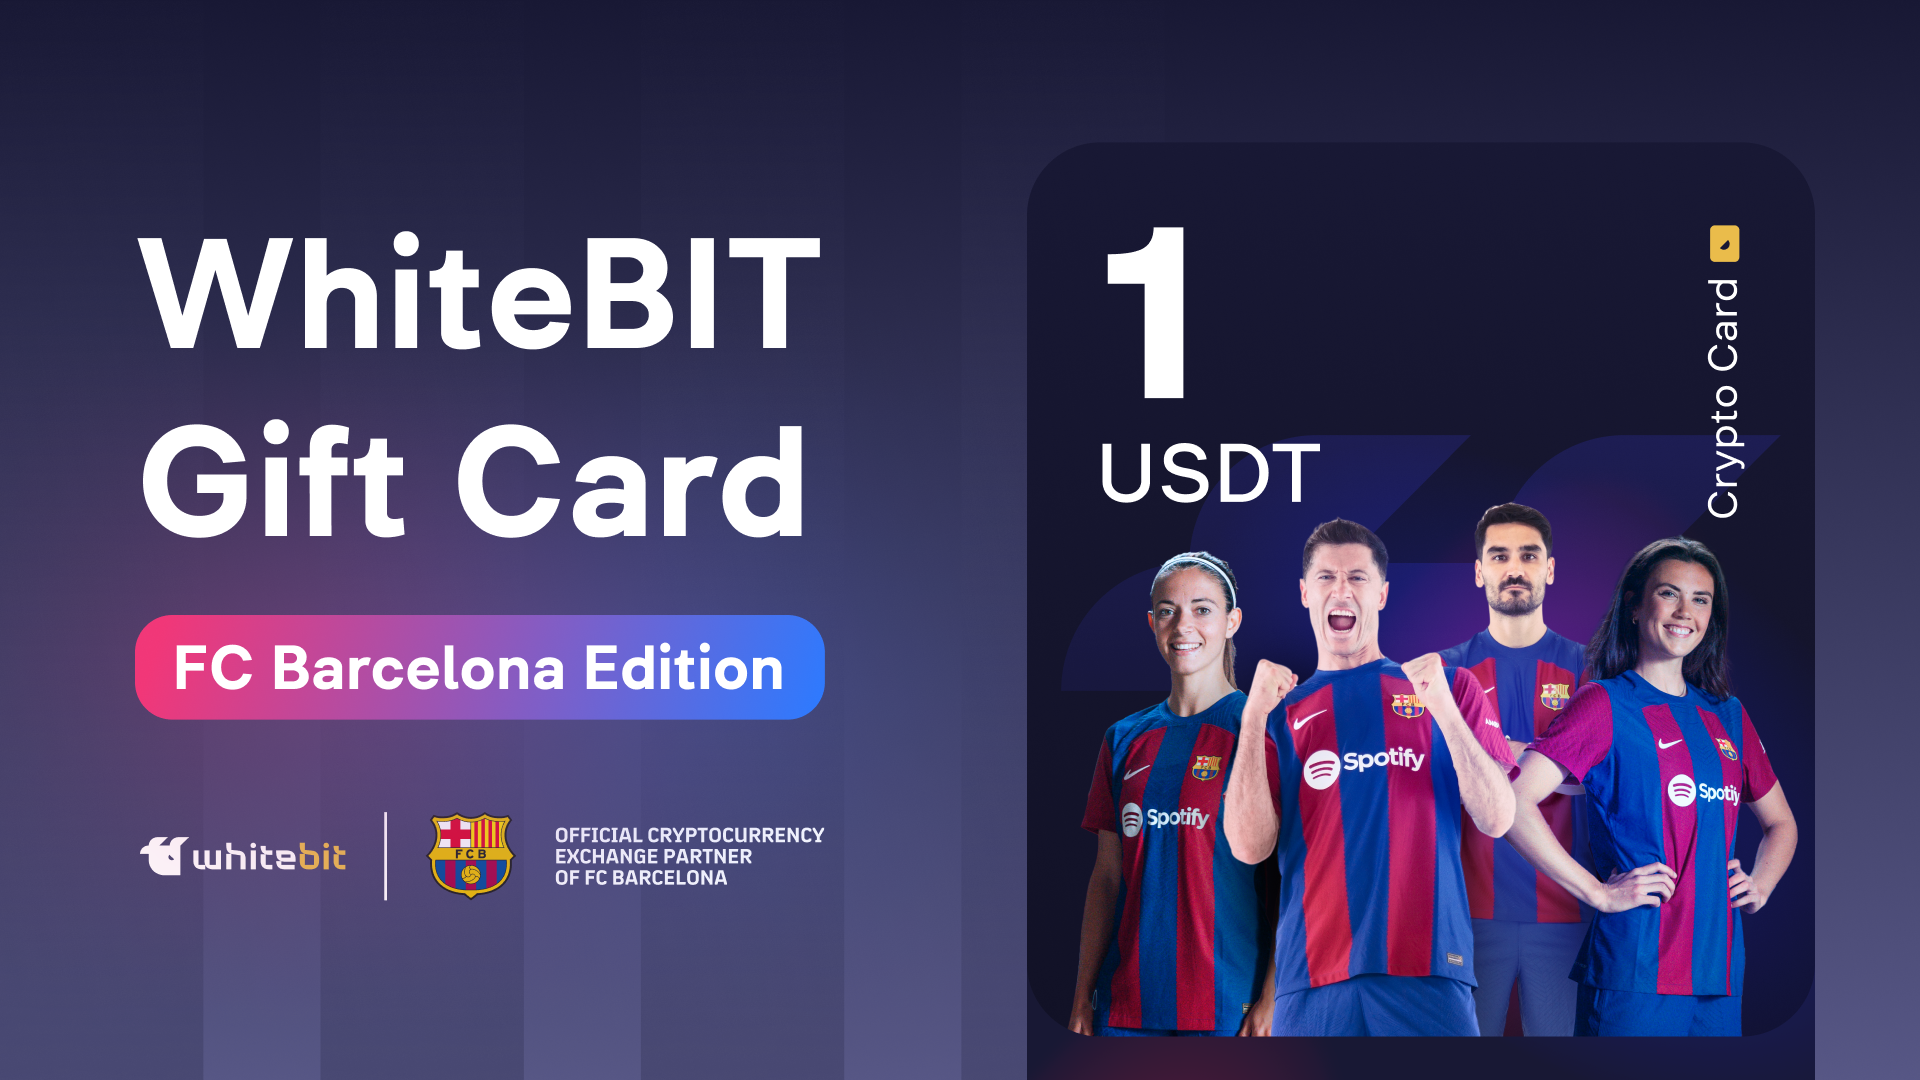 WhiteBIT - FC Barcelona Edition - 1 USDT Gift Card [$ 1.39]